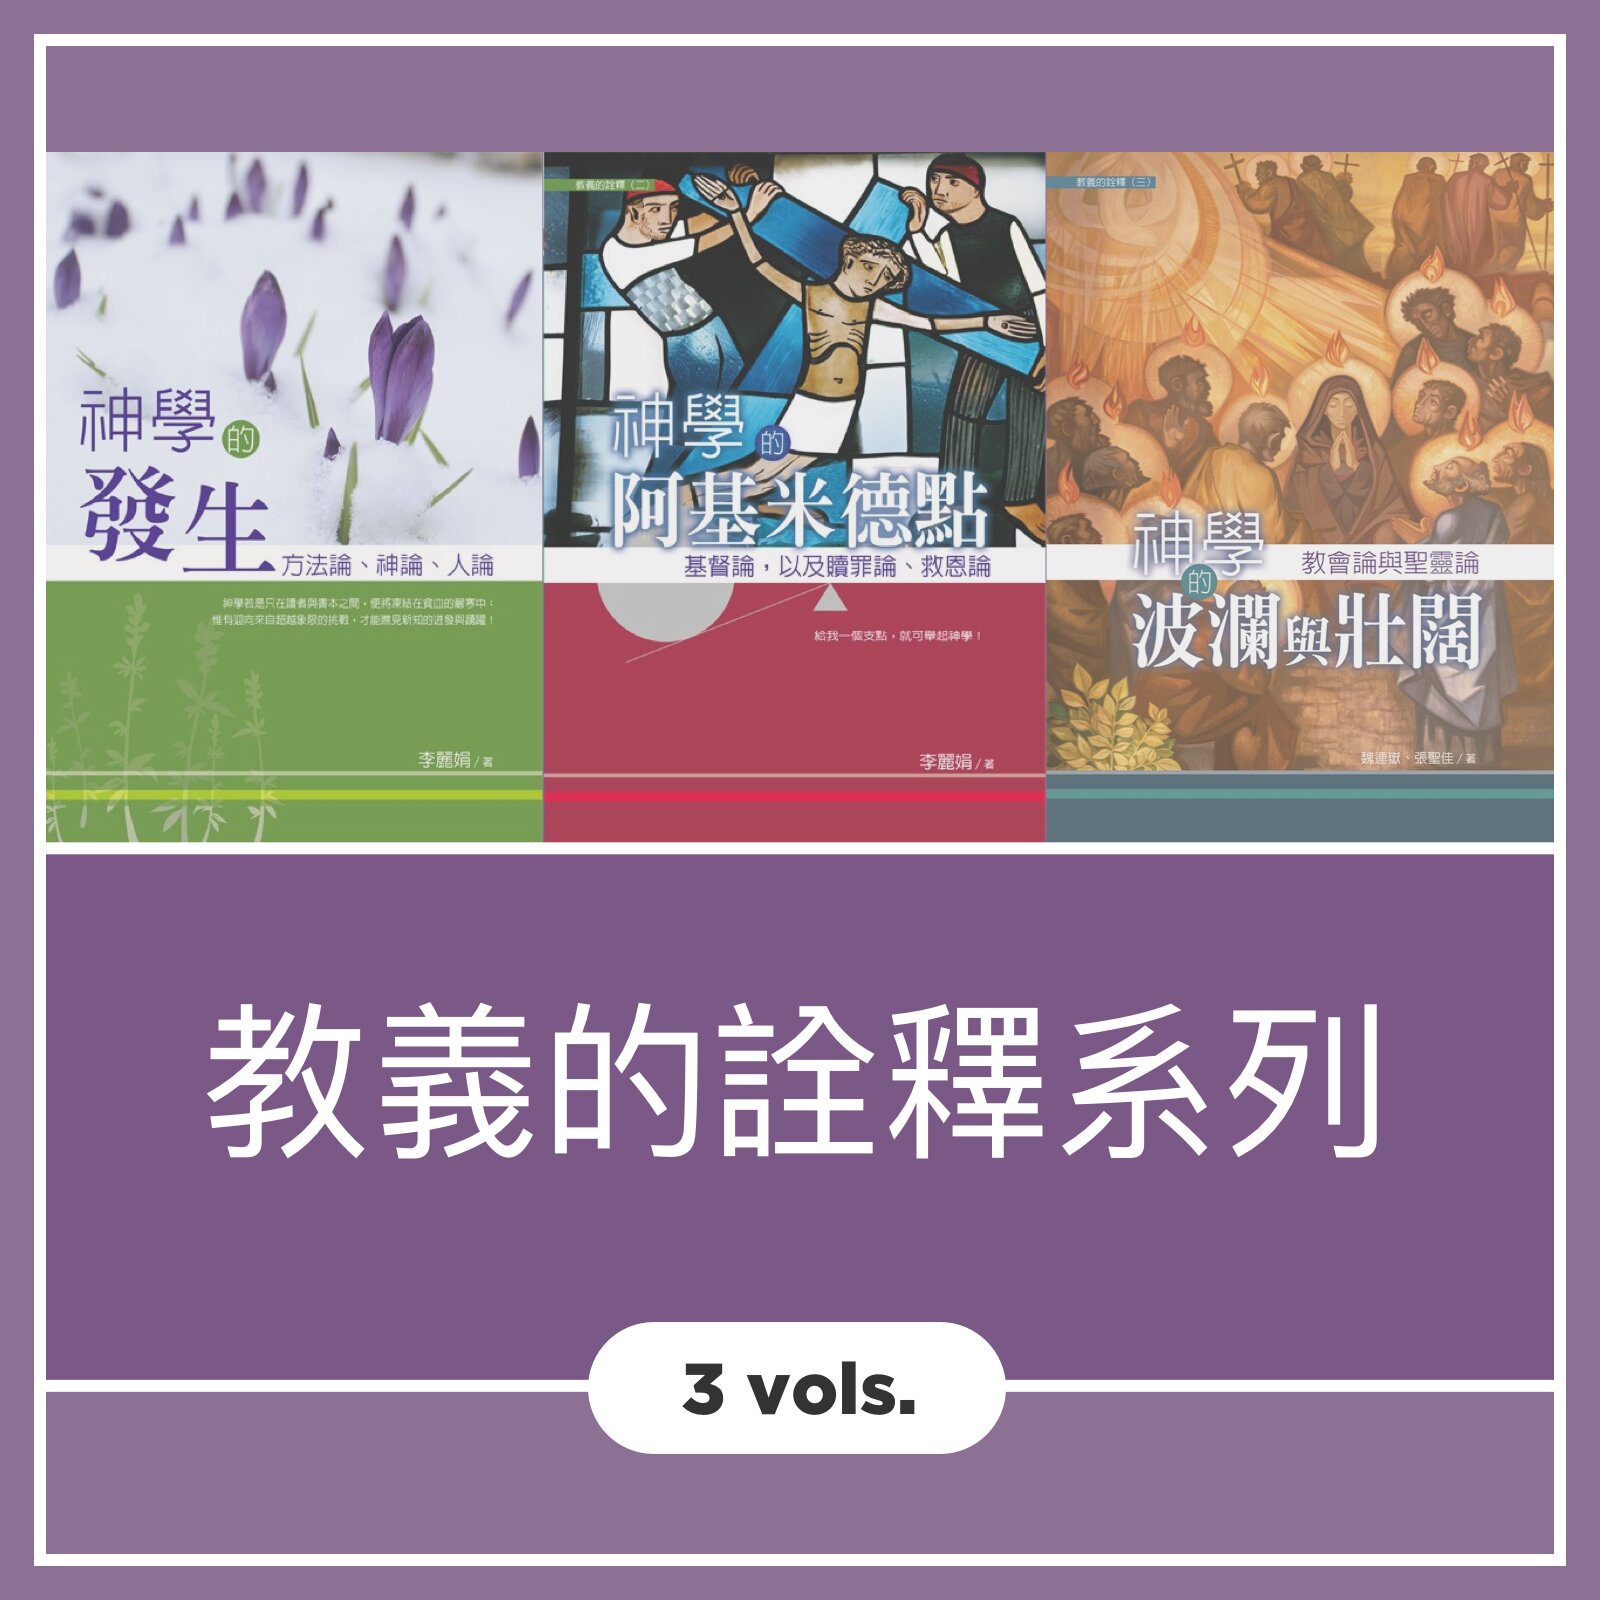 Logos 圣经软件| 中文新书预购